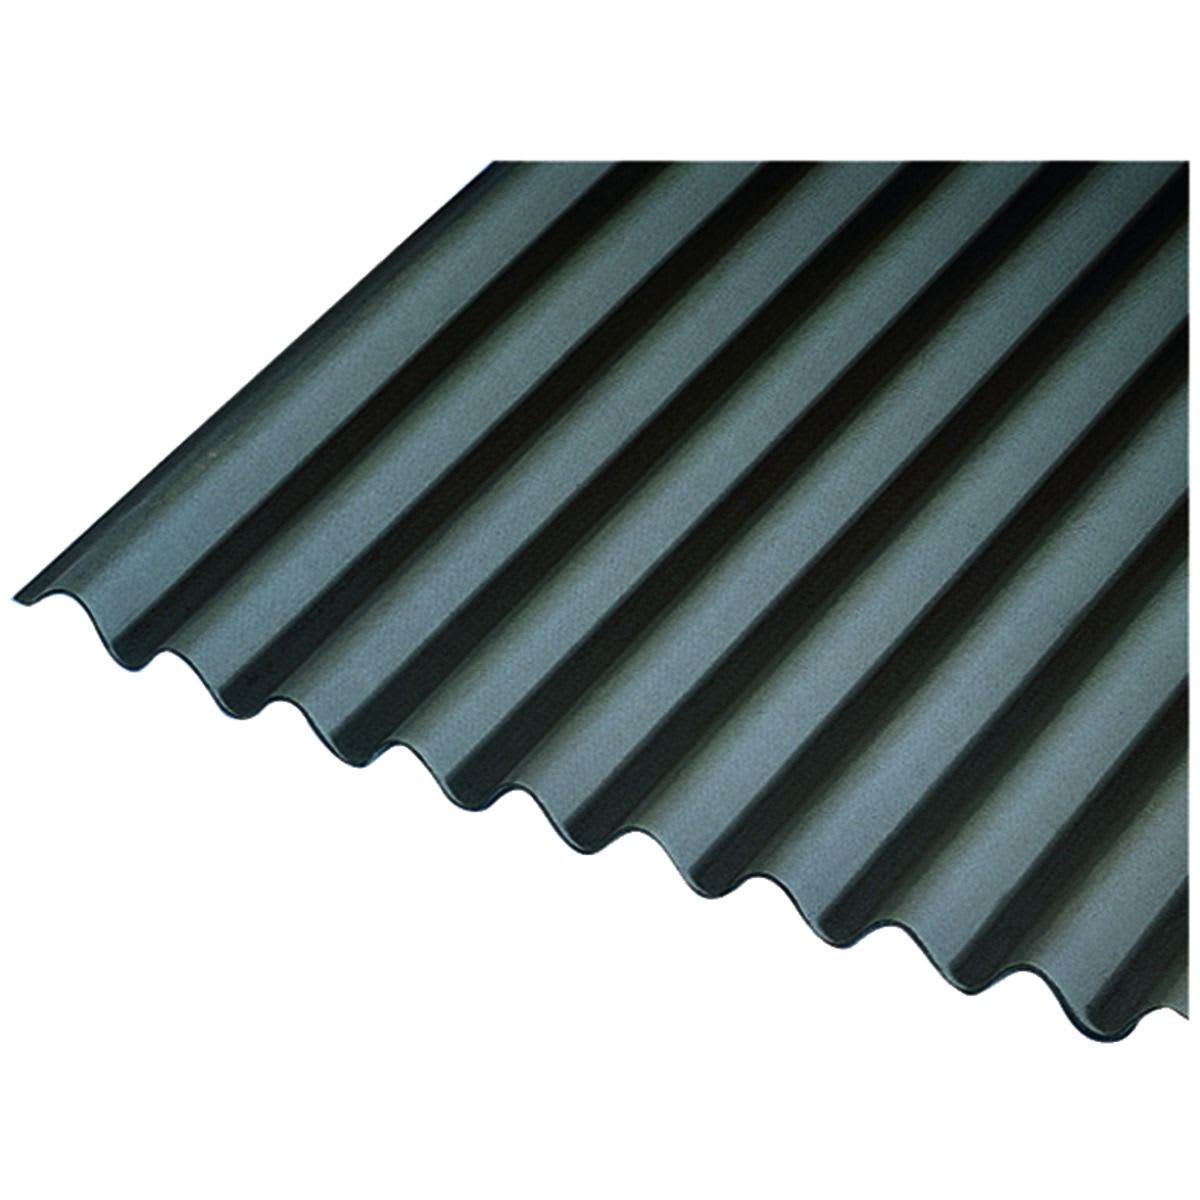 Onduline Classic Black Bitumen Corrugated Roof Sheet -